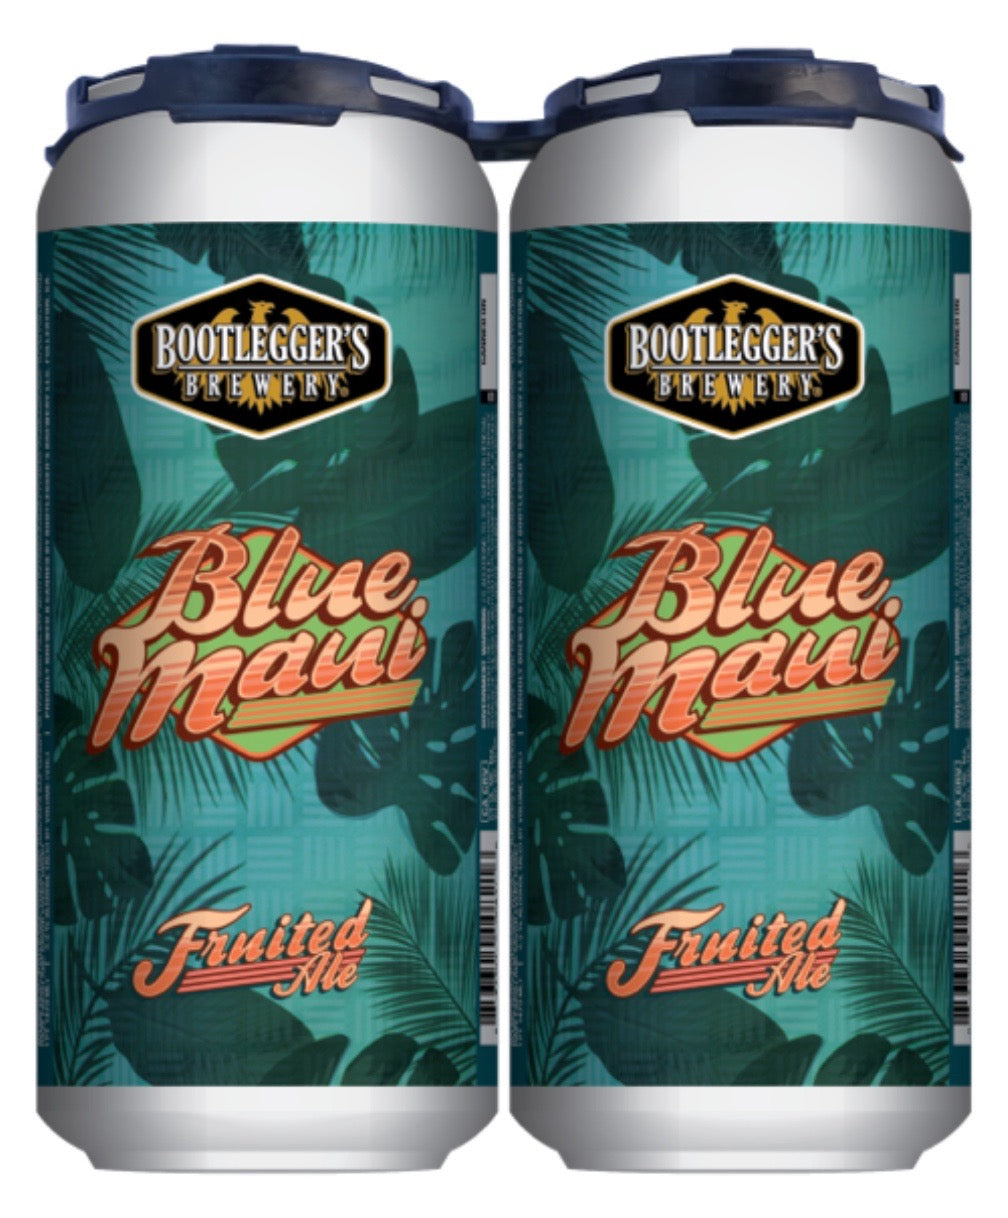 Bootleggers Blue Maui 4 pack cans